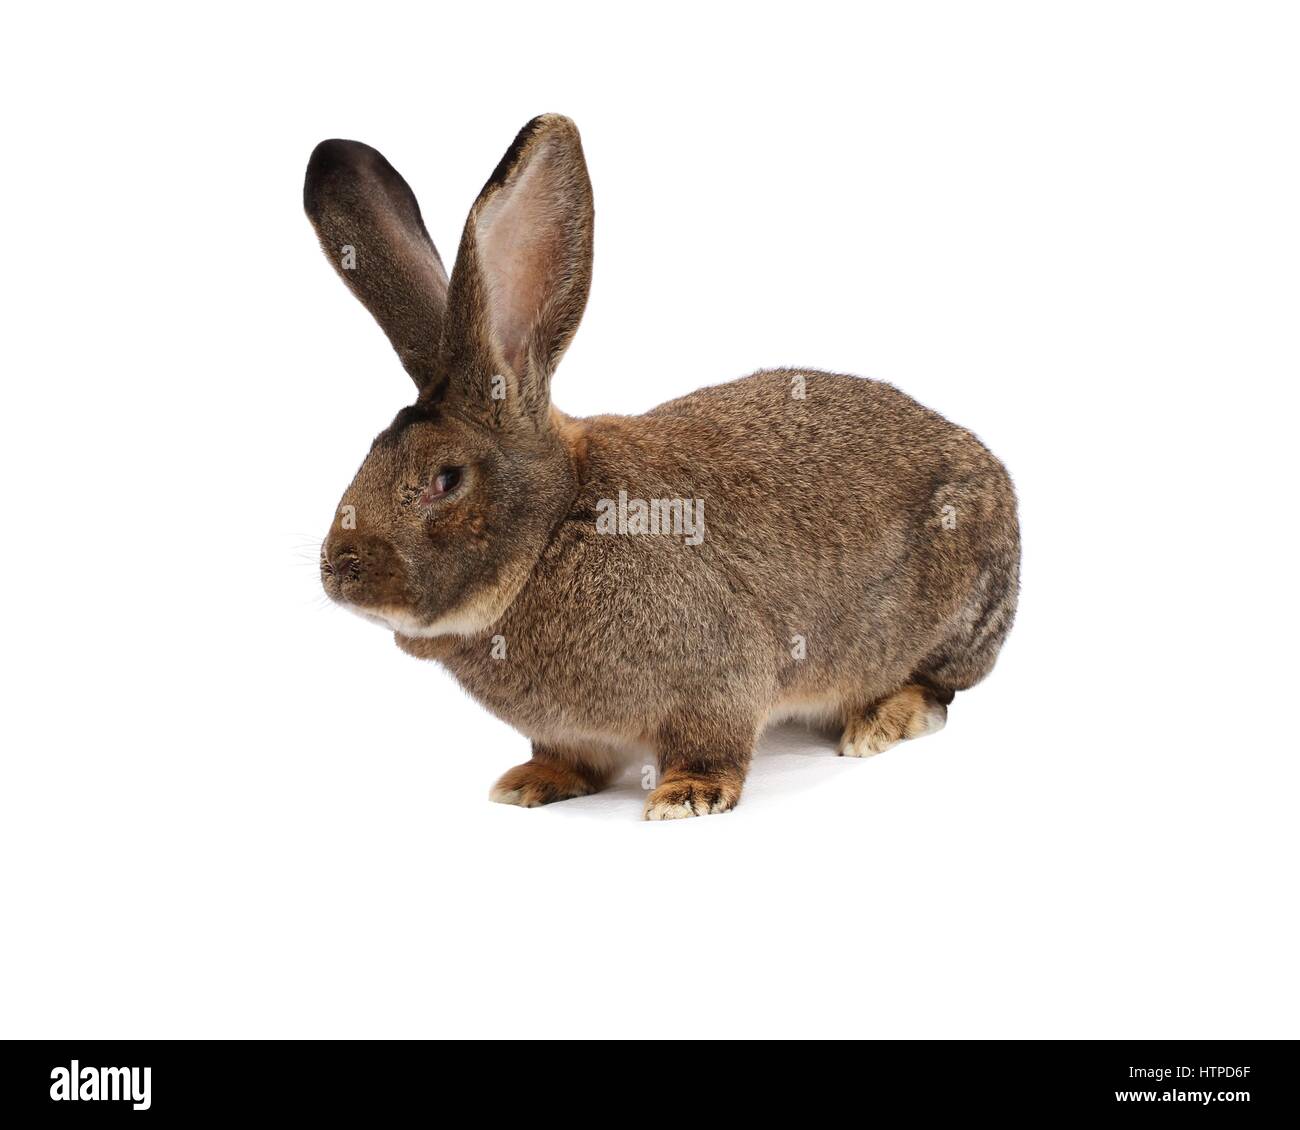 Purebred rabbit Belgian Giant on white cloth Stock Photo